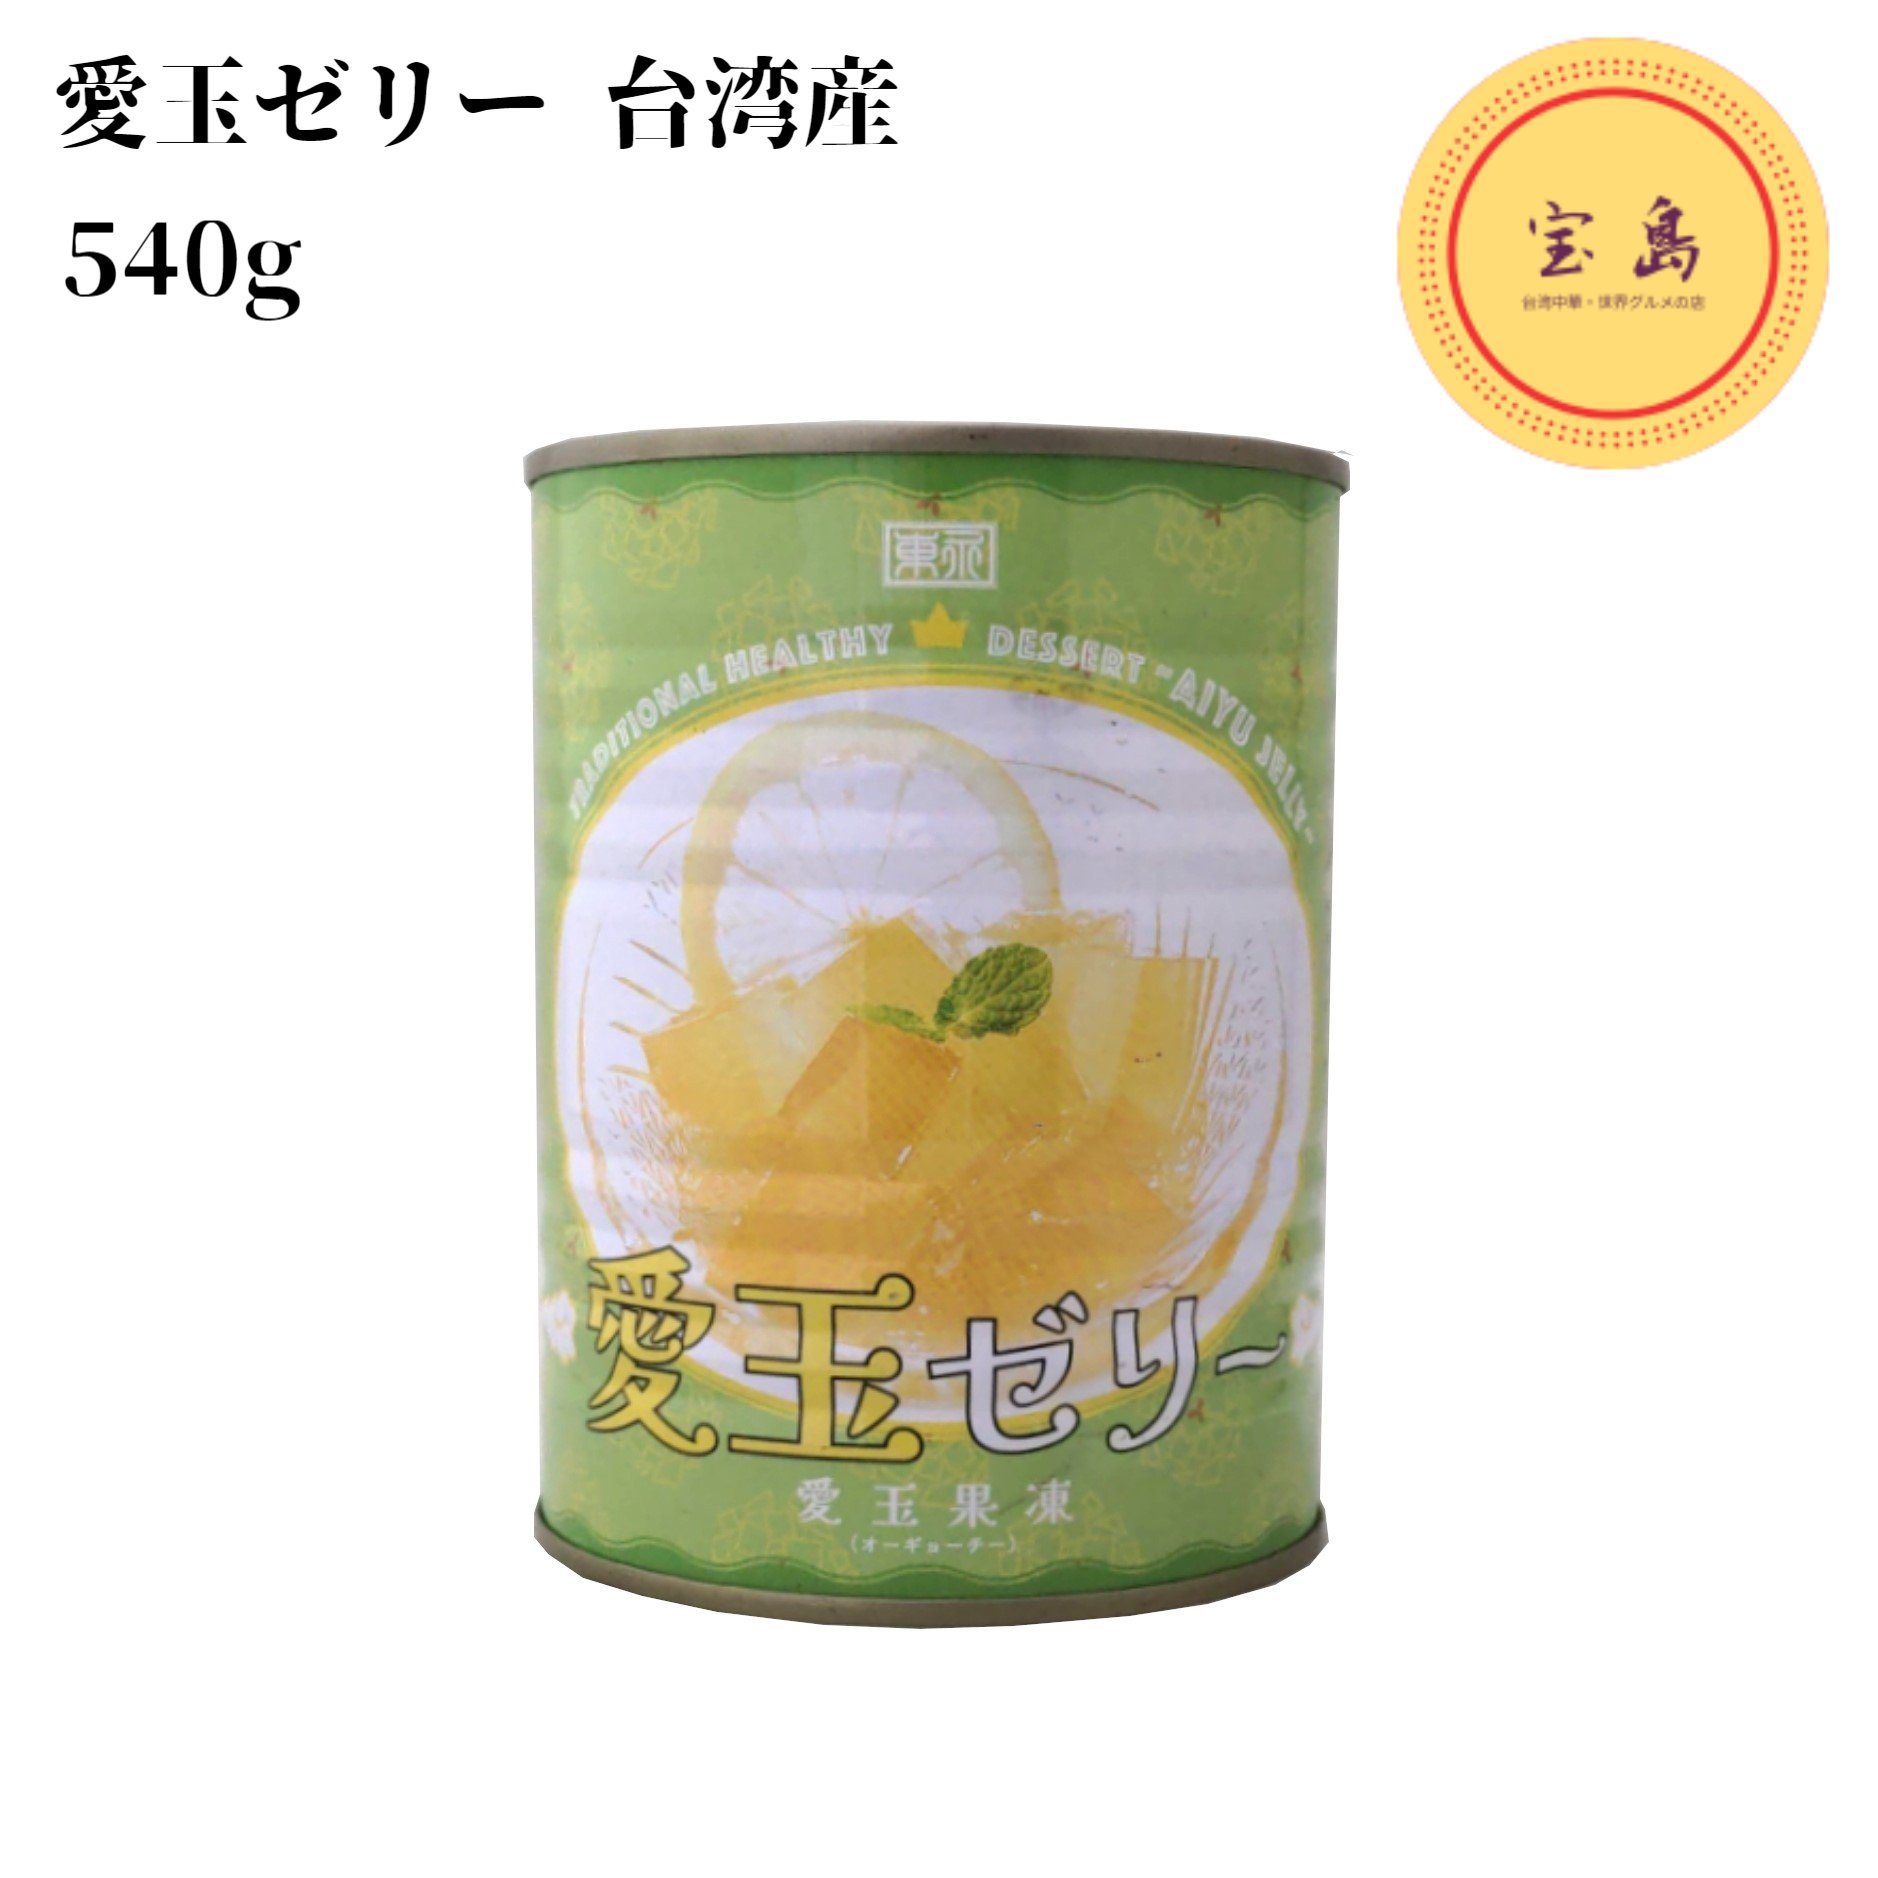 東永 愛玉果凍 愛玉ゼリー オーギョーチ 540g 缶詰 台湾産（賞味期限：2026.03.20）